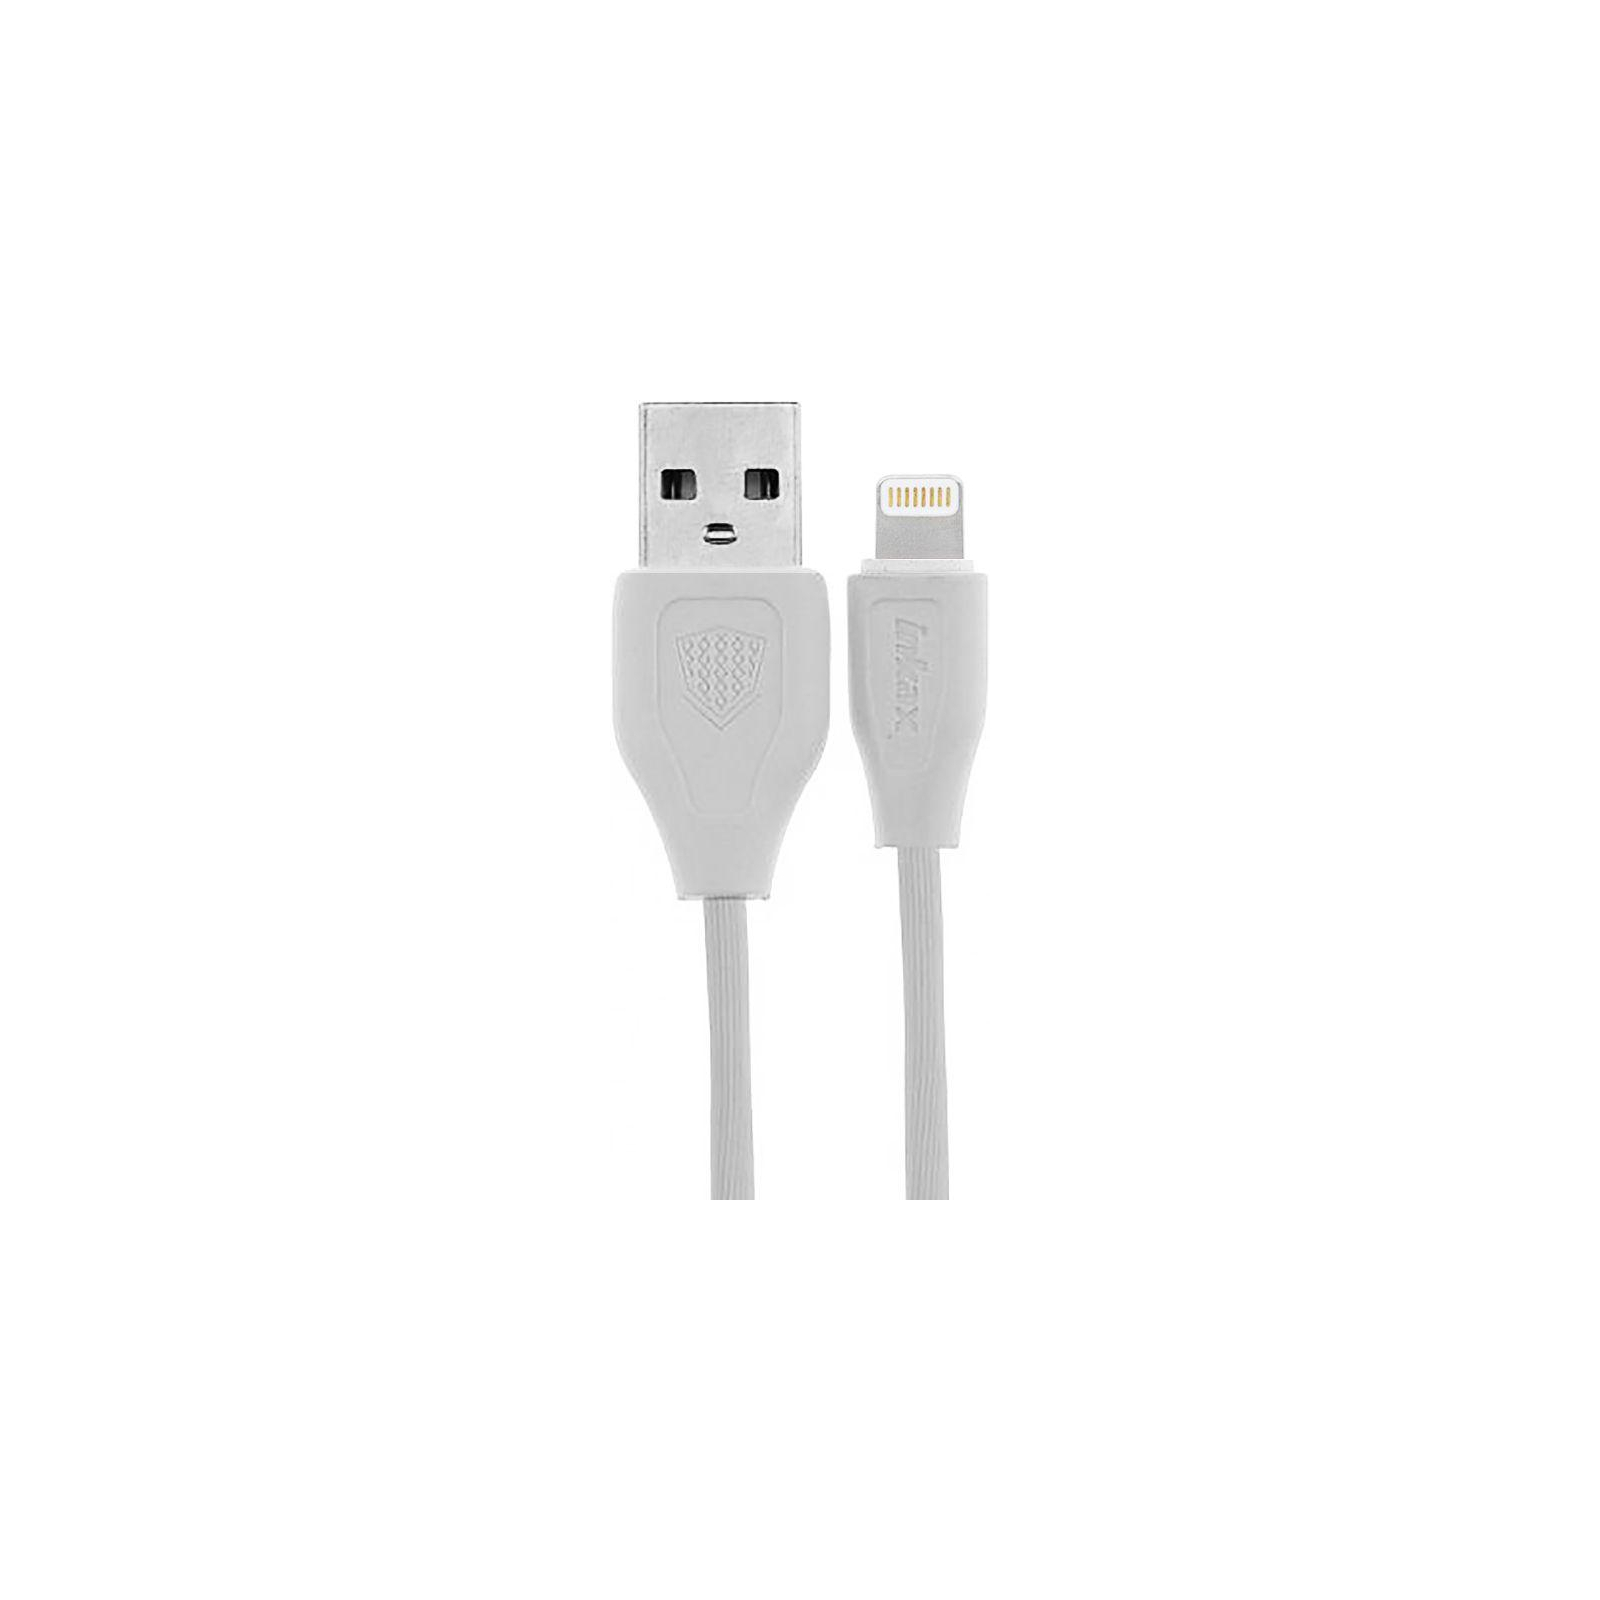 Дата кабель USB 2.0 AM to Lightning 0.2m CK-21 White Inkax (F_72185)